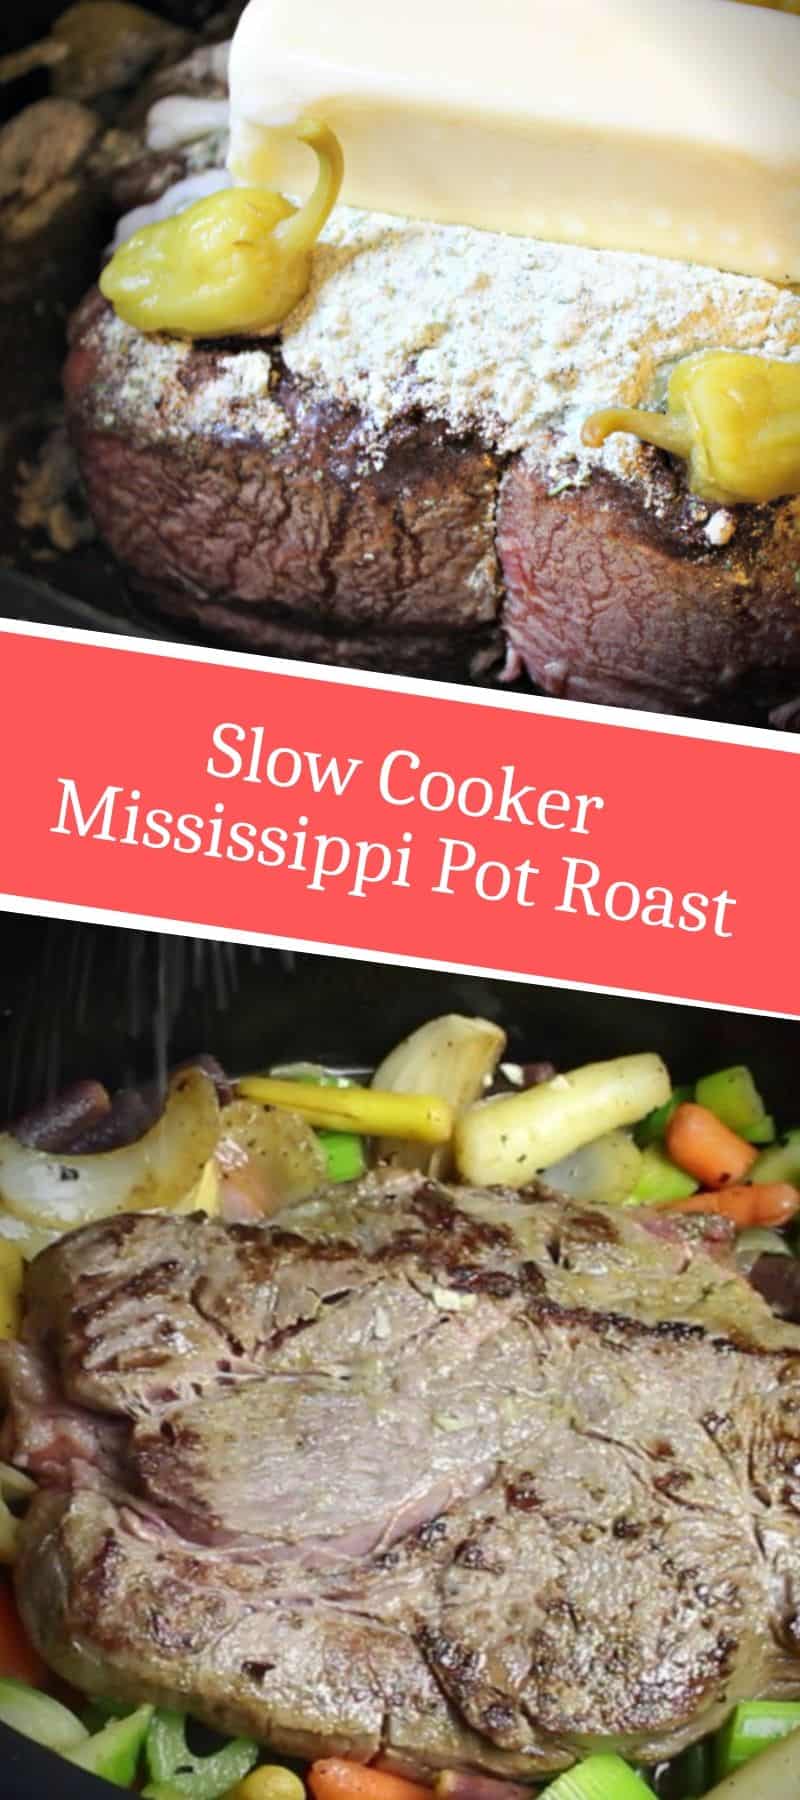 Slow Cooker Mississippi Pot Roast Recipe 3